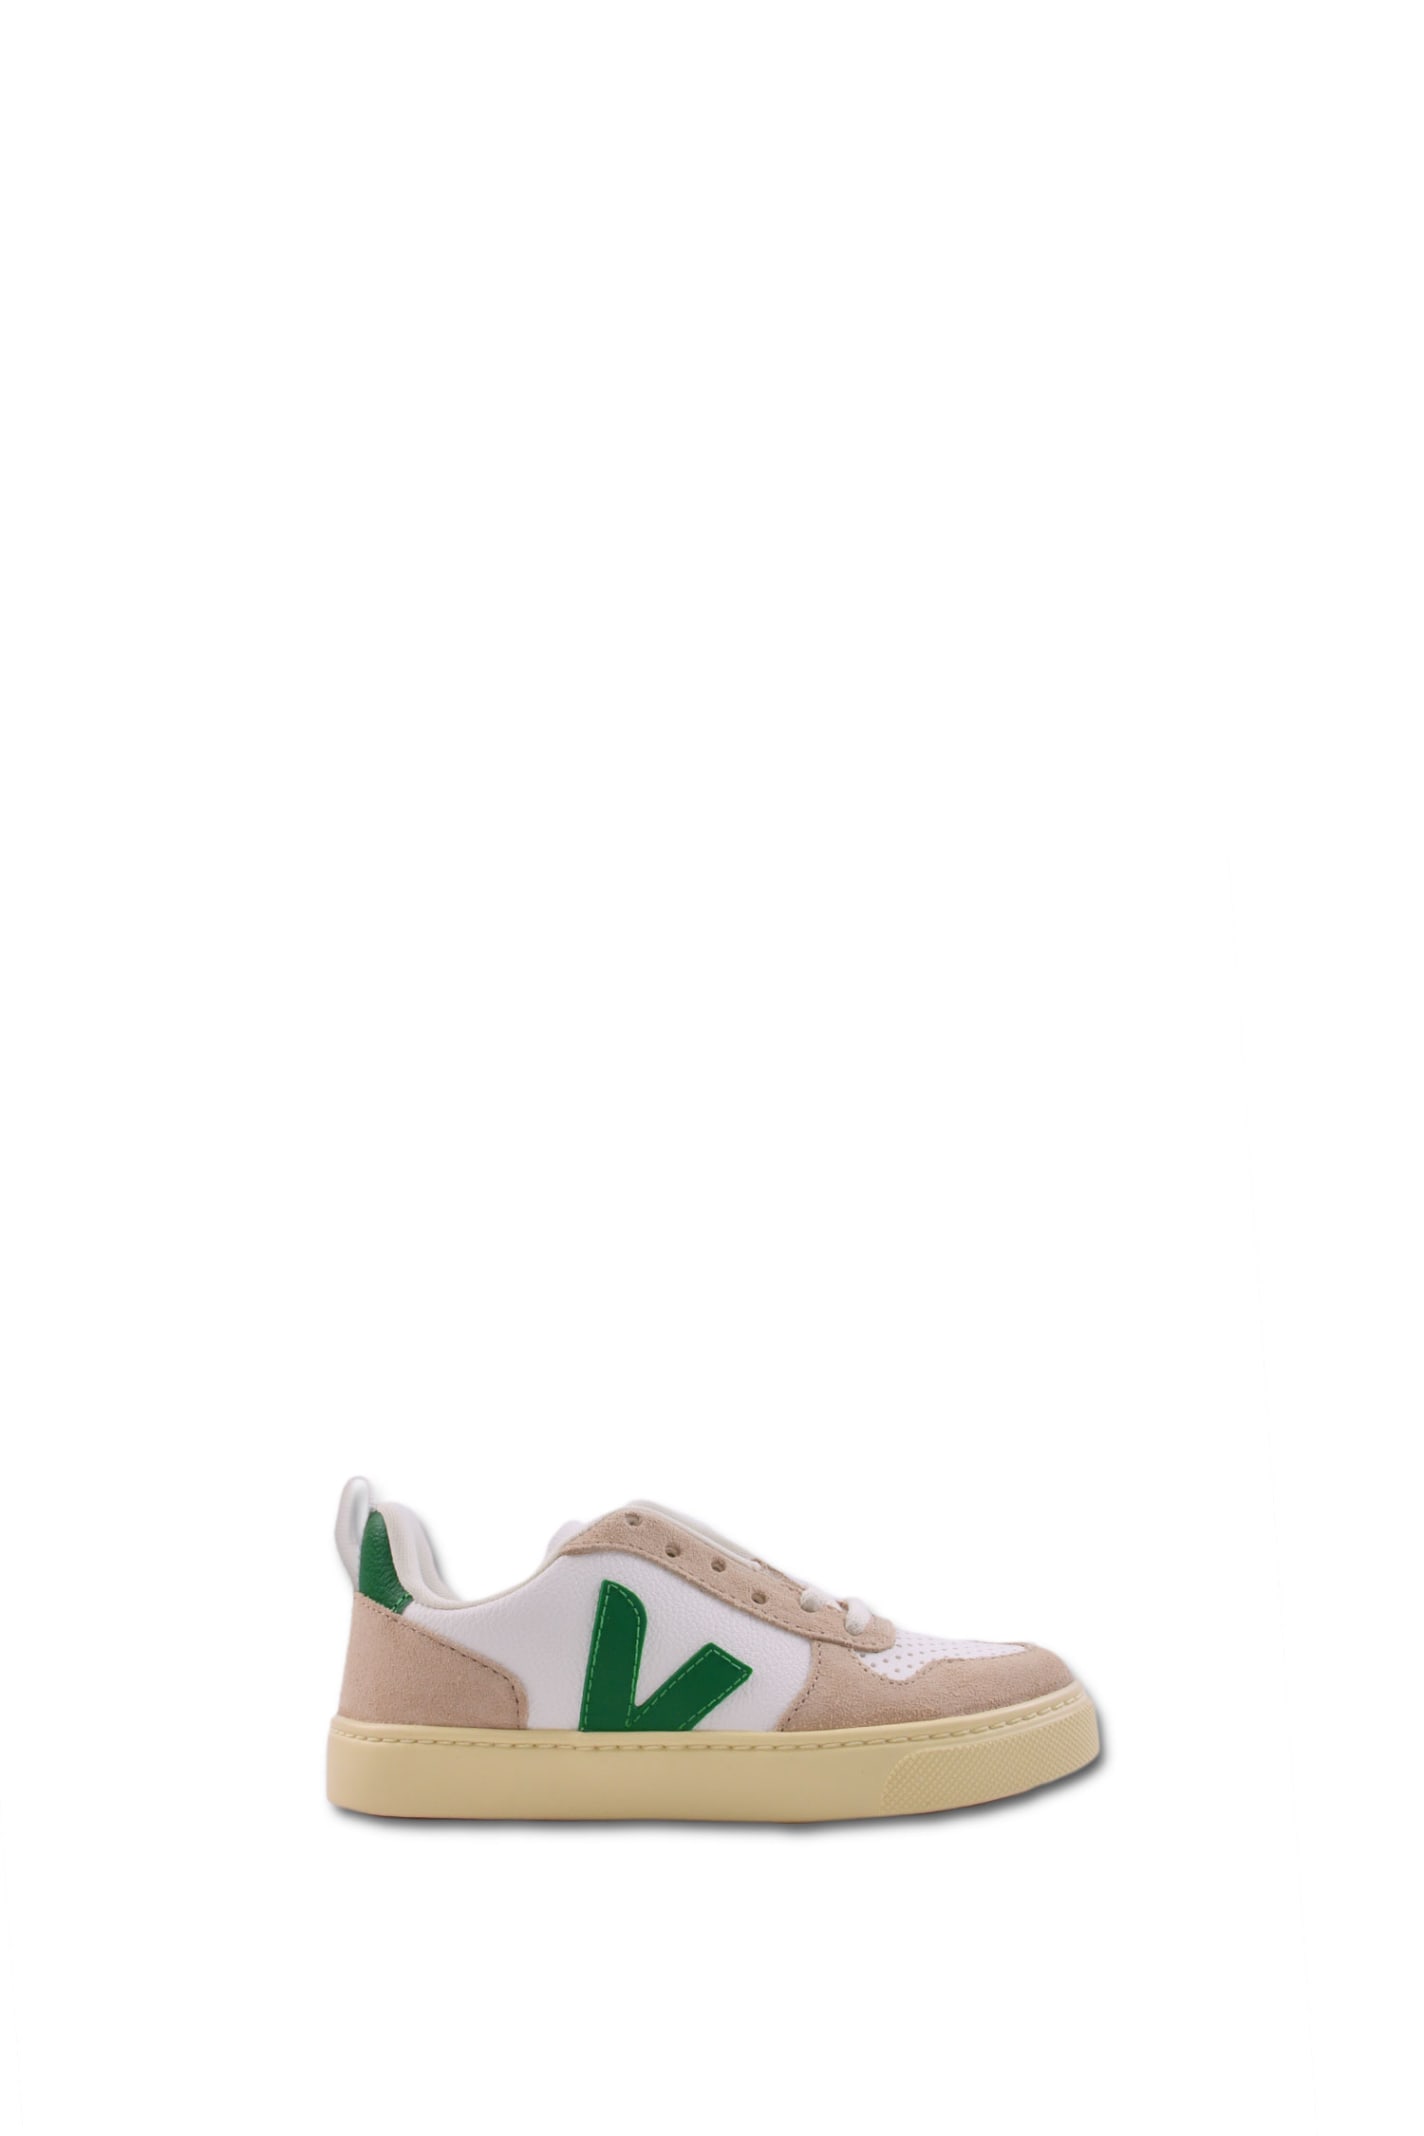 Veja Kids' Leather Sneakers In Green